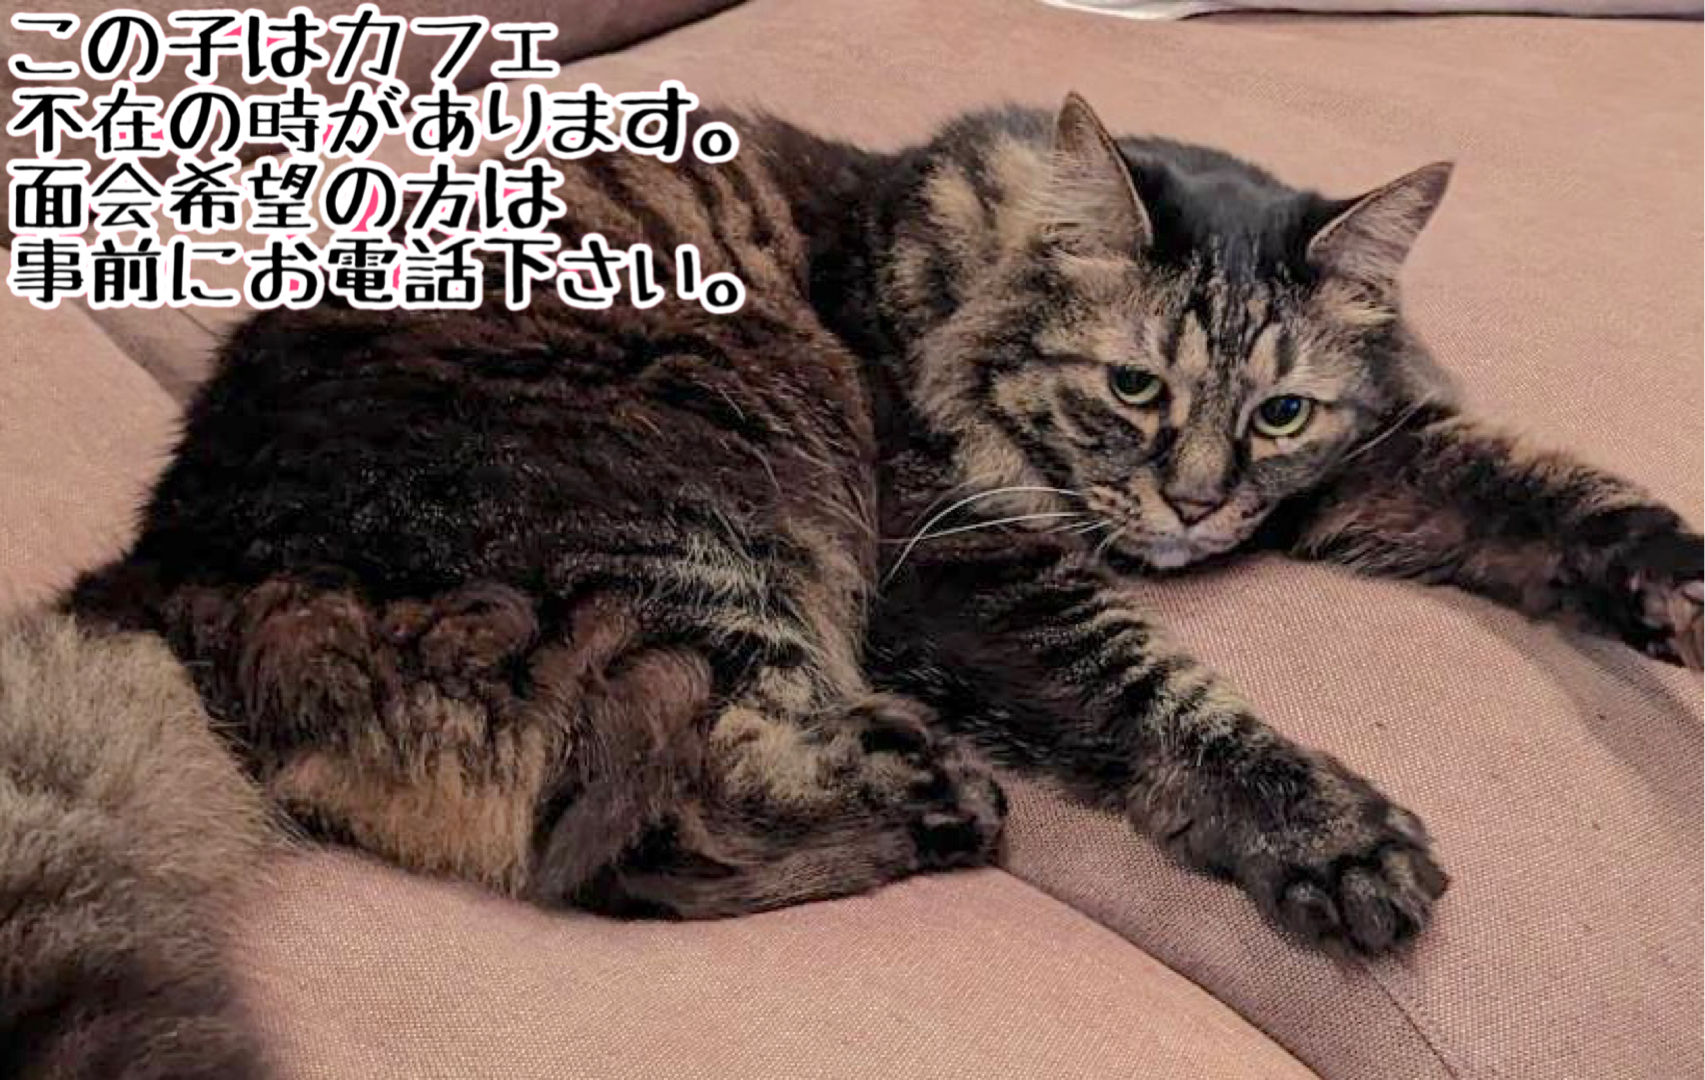 <ul>
<li>猫種：日本猫</li>
<li>名前（性別）：ゴン(女の子)</li>
<li>年齢：2012～2014年頃生まれ</li>
<li>保護経緯：飼い主が高齢になり逝去され飼育困難</li>
</ul>
